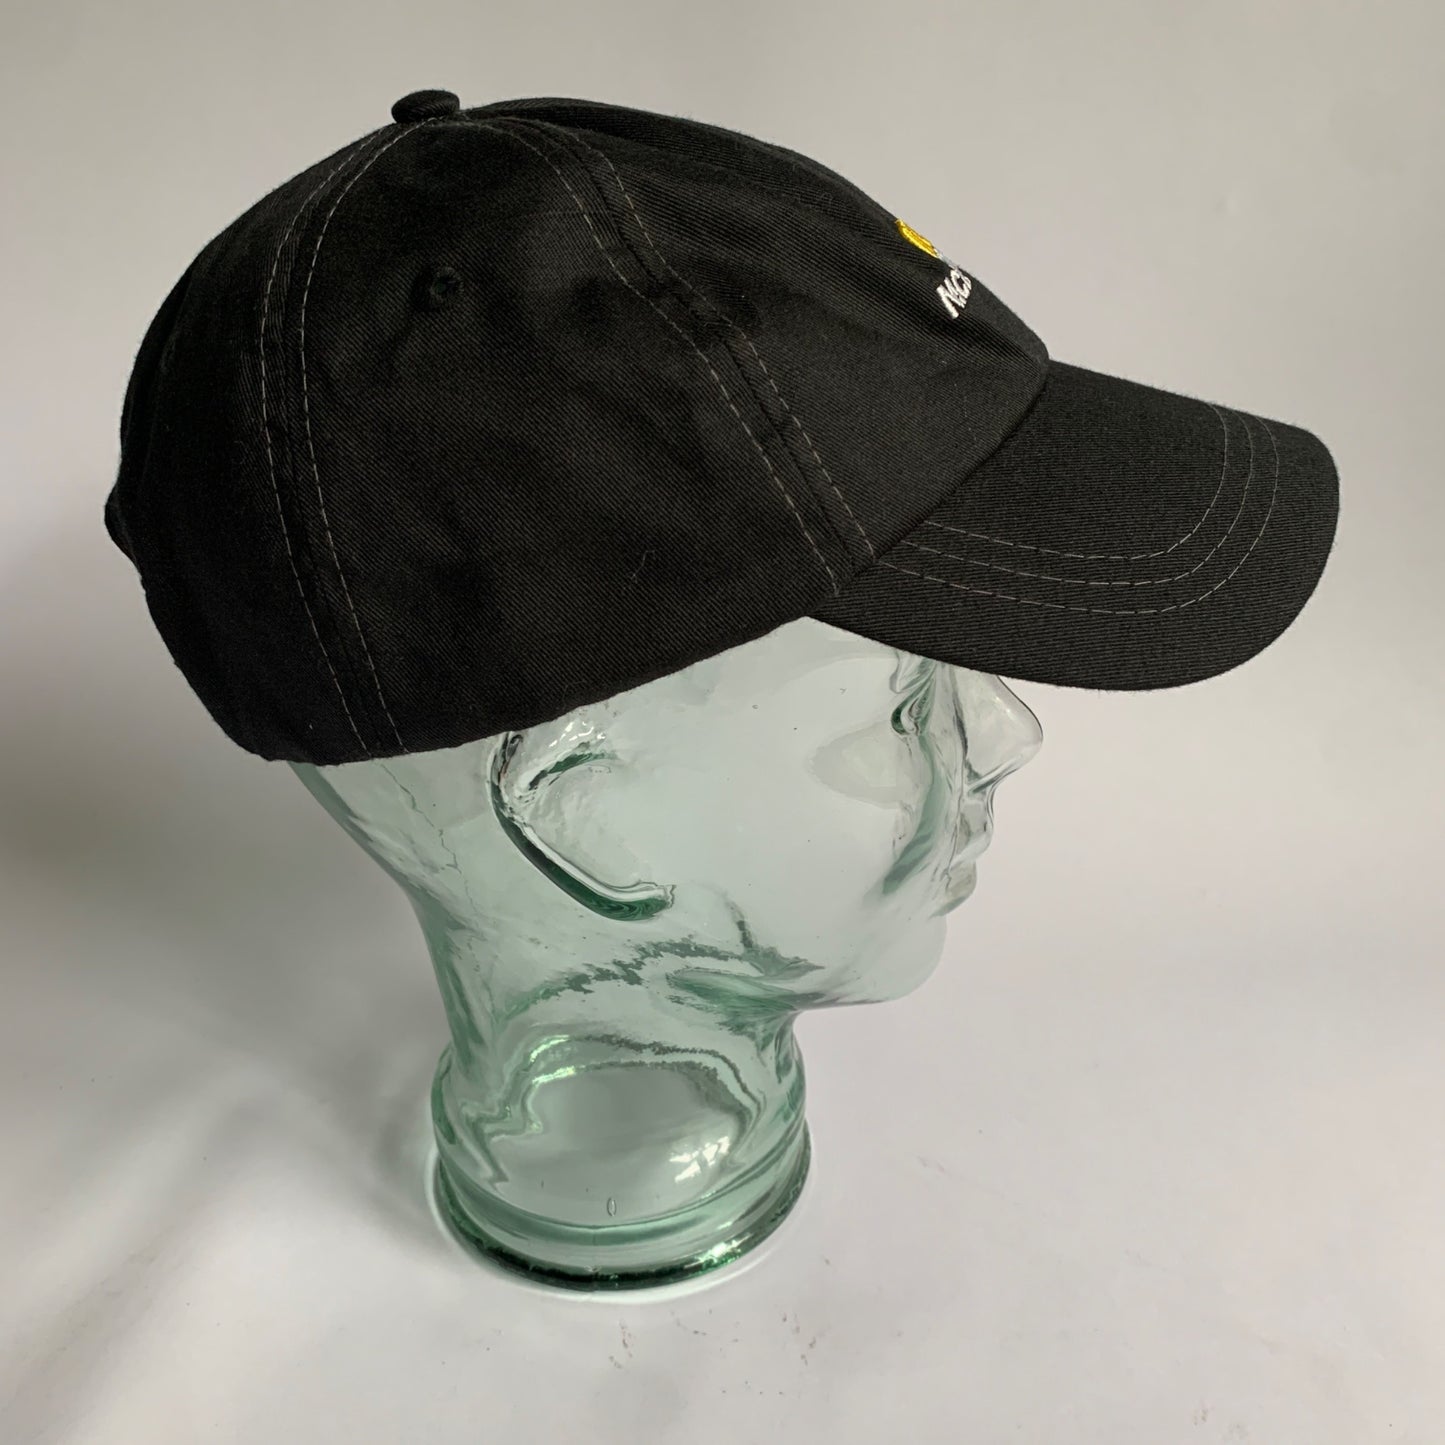 McDonalds Crew Employee Hat Black Cap Baseball Recycled Plastic